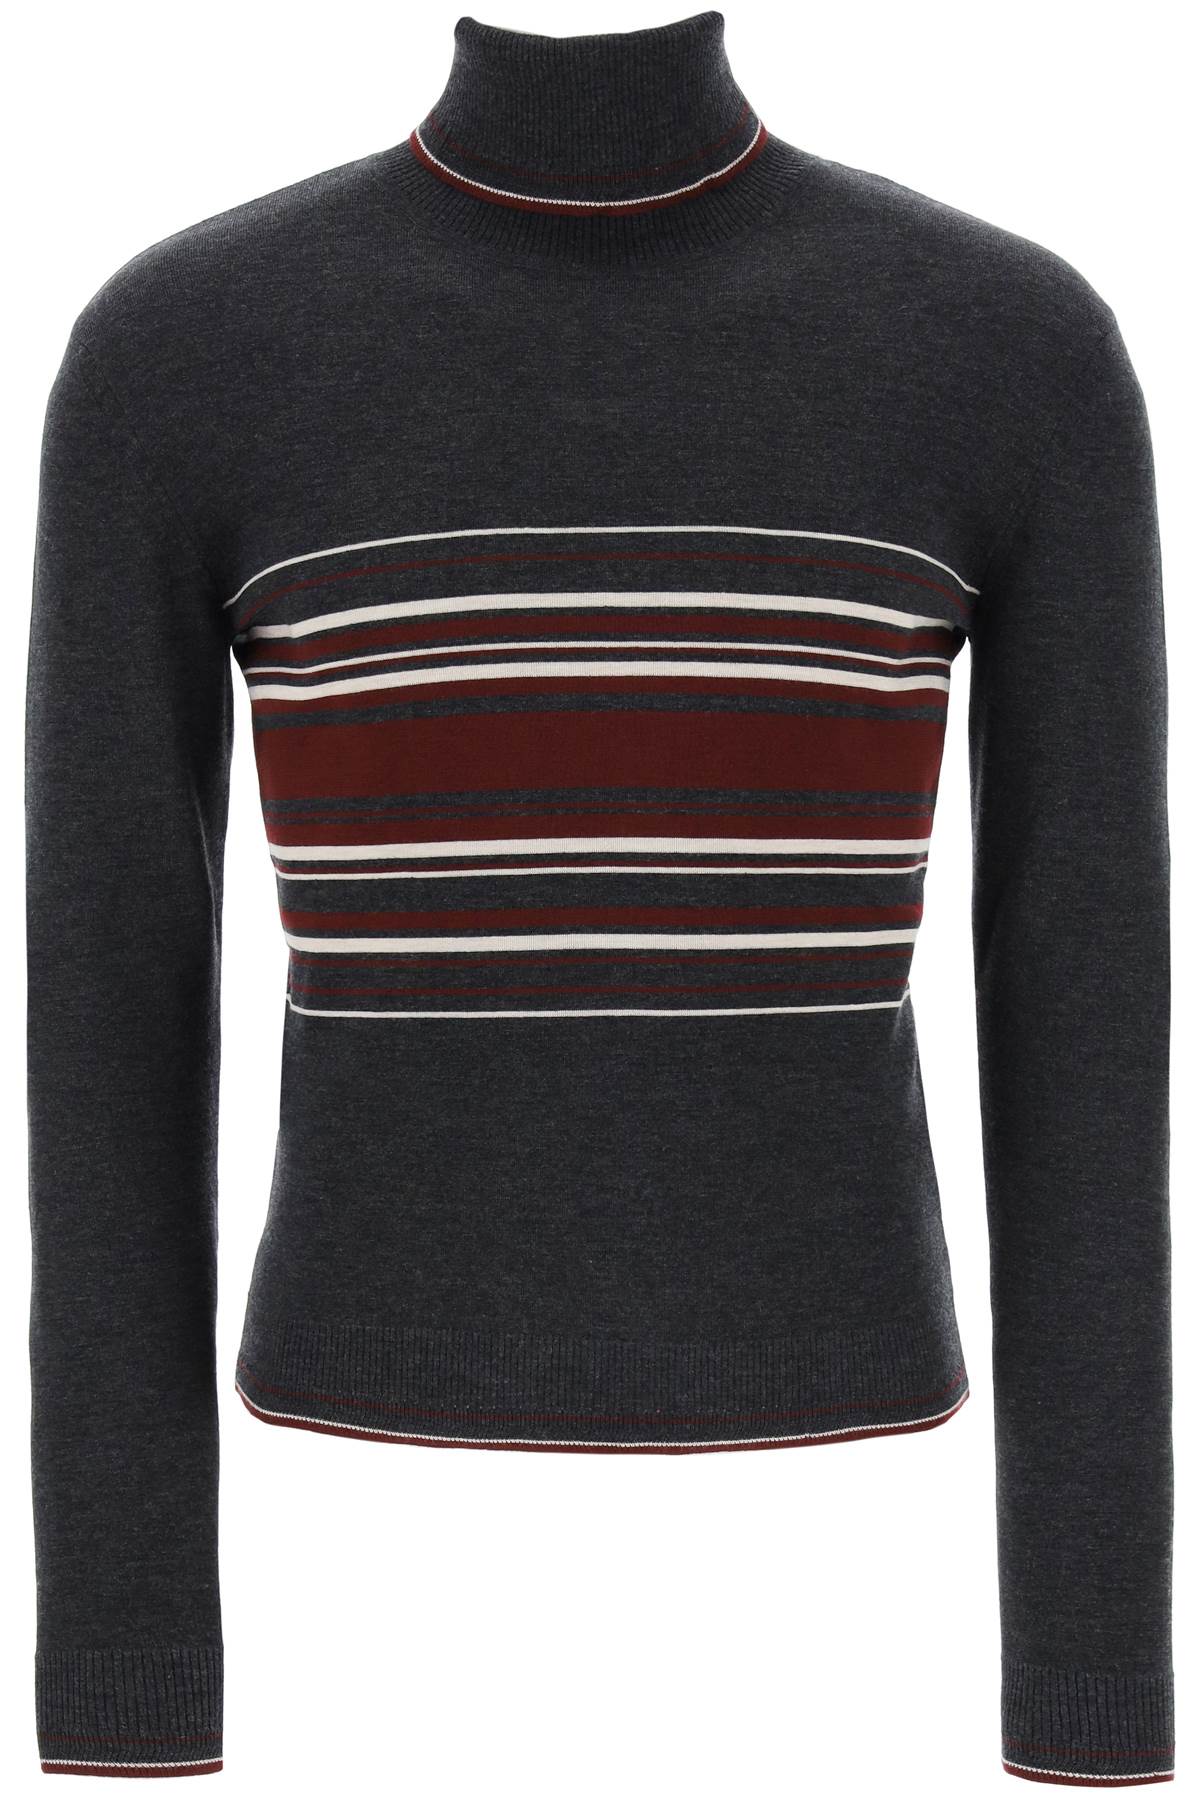 Dolce & gabbana striped wool turtleneck sweater GXQ81T JCVG3 VARIANTE ABBINATA